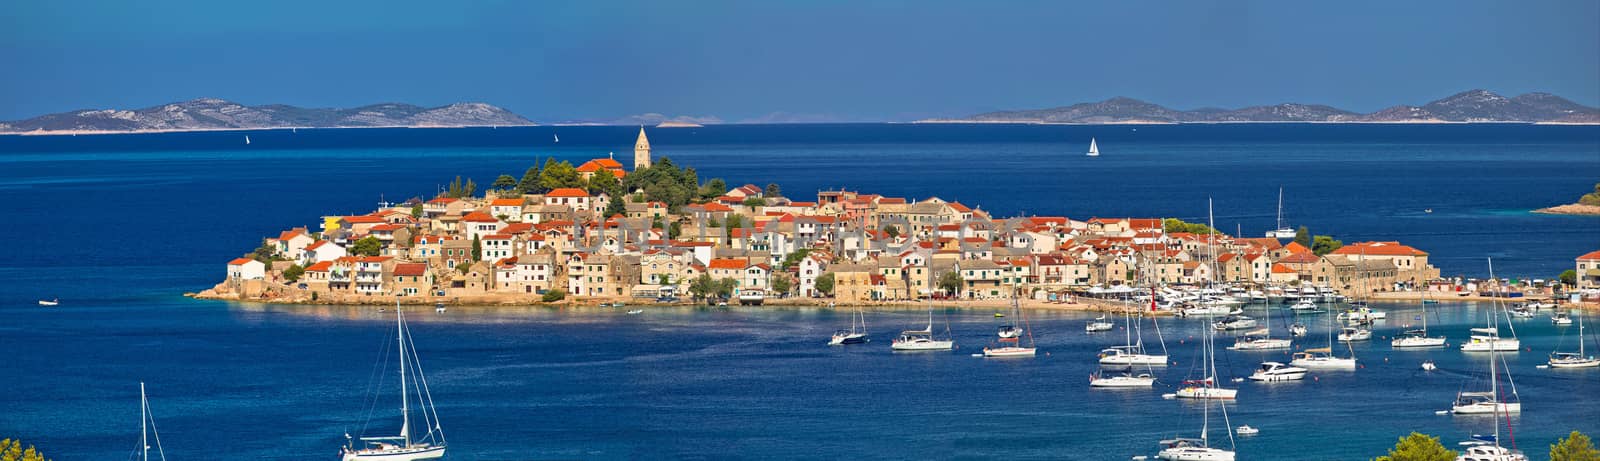 Town of Primosten Adriatic archipelago panoramic view by xbrchx